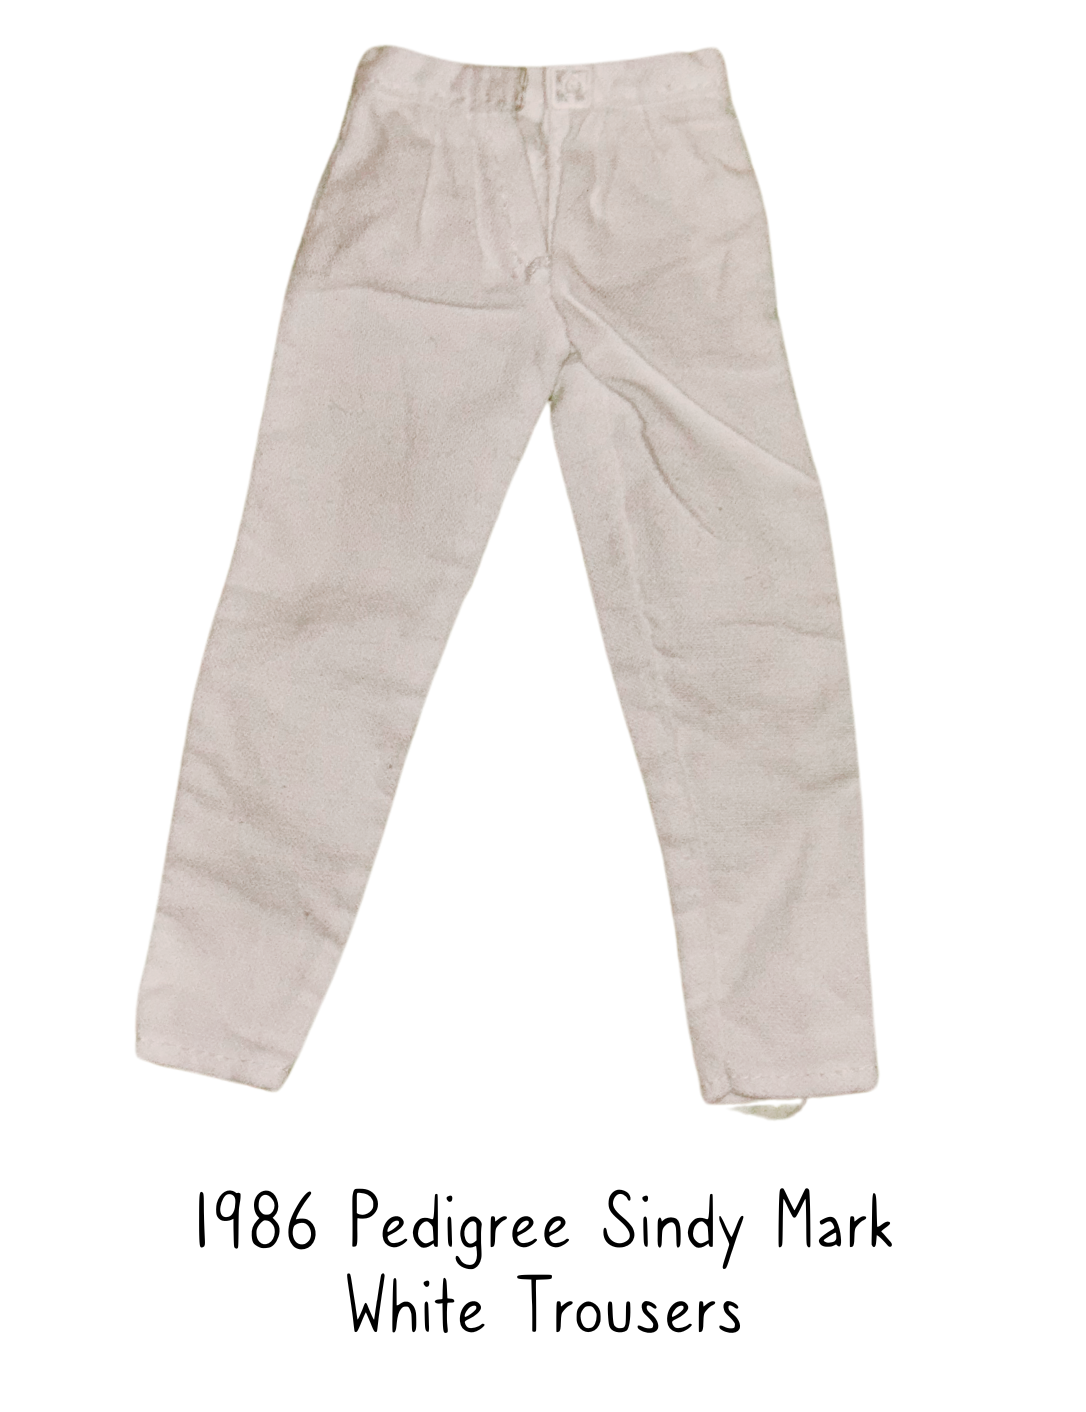 1986 Pedigree Sindy Friend Mark Fashion Doll White Trousers